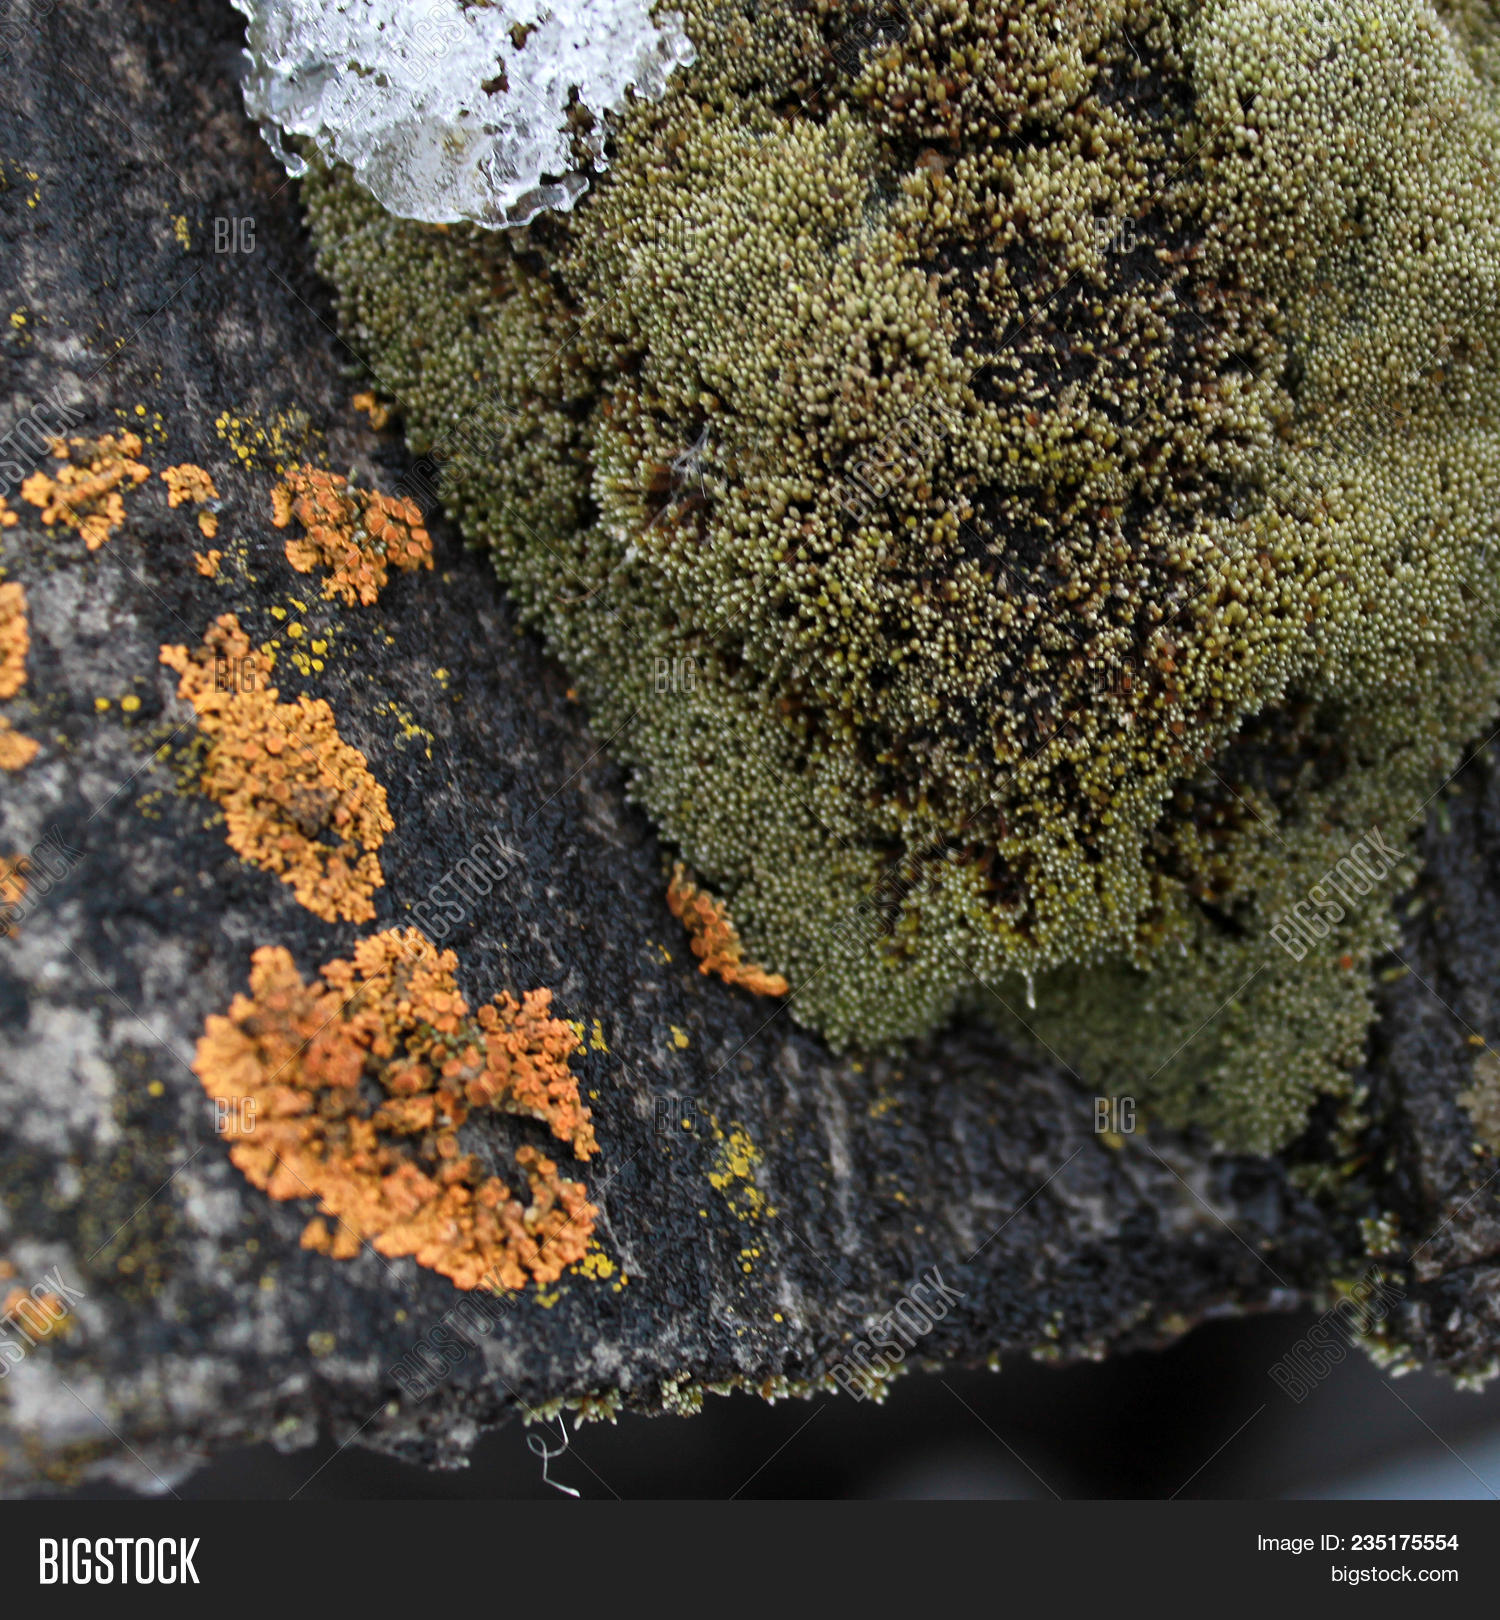 Lichen Moss Growing On Bark Tree. Image & Photo | Bigstock